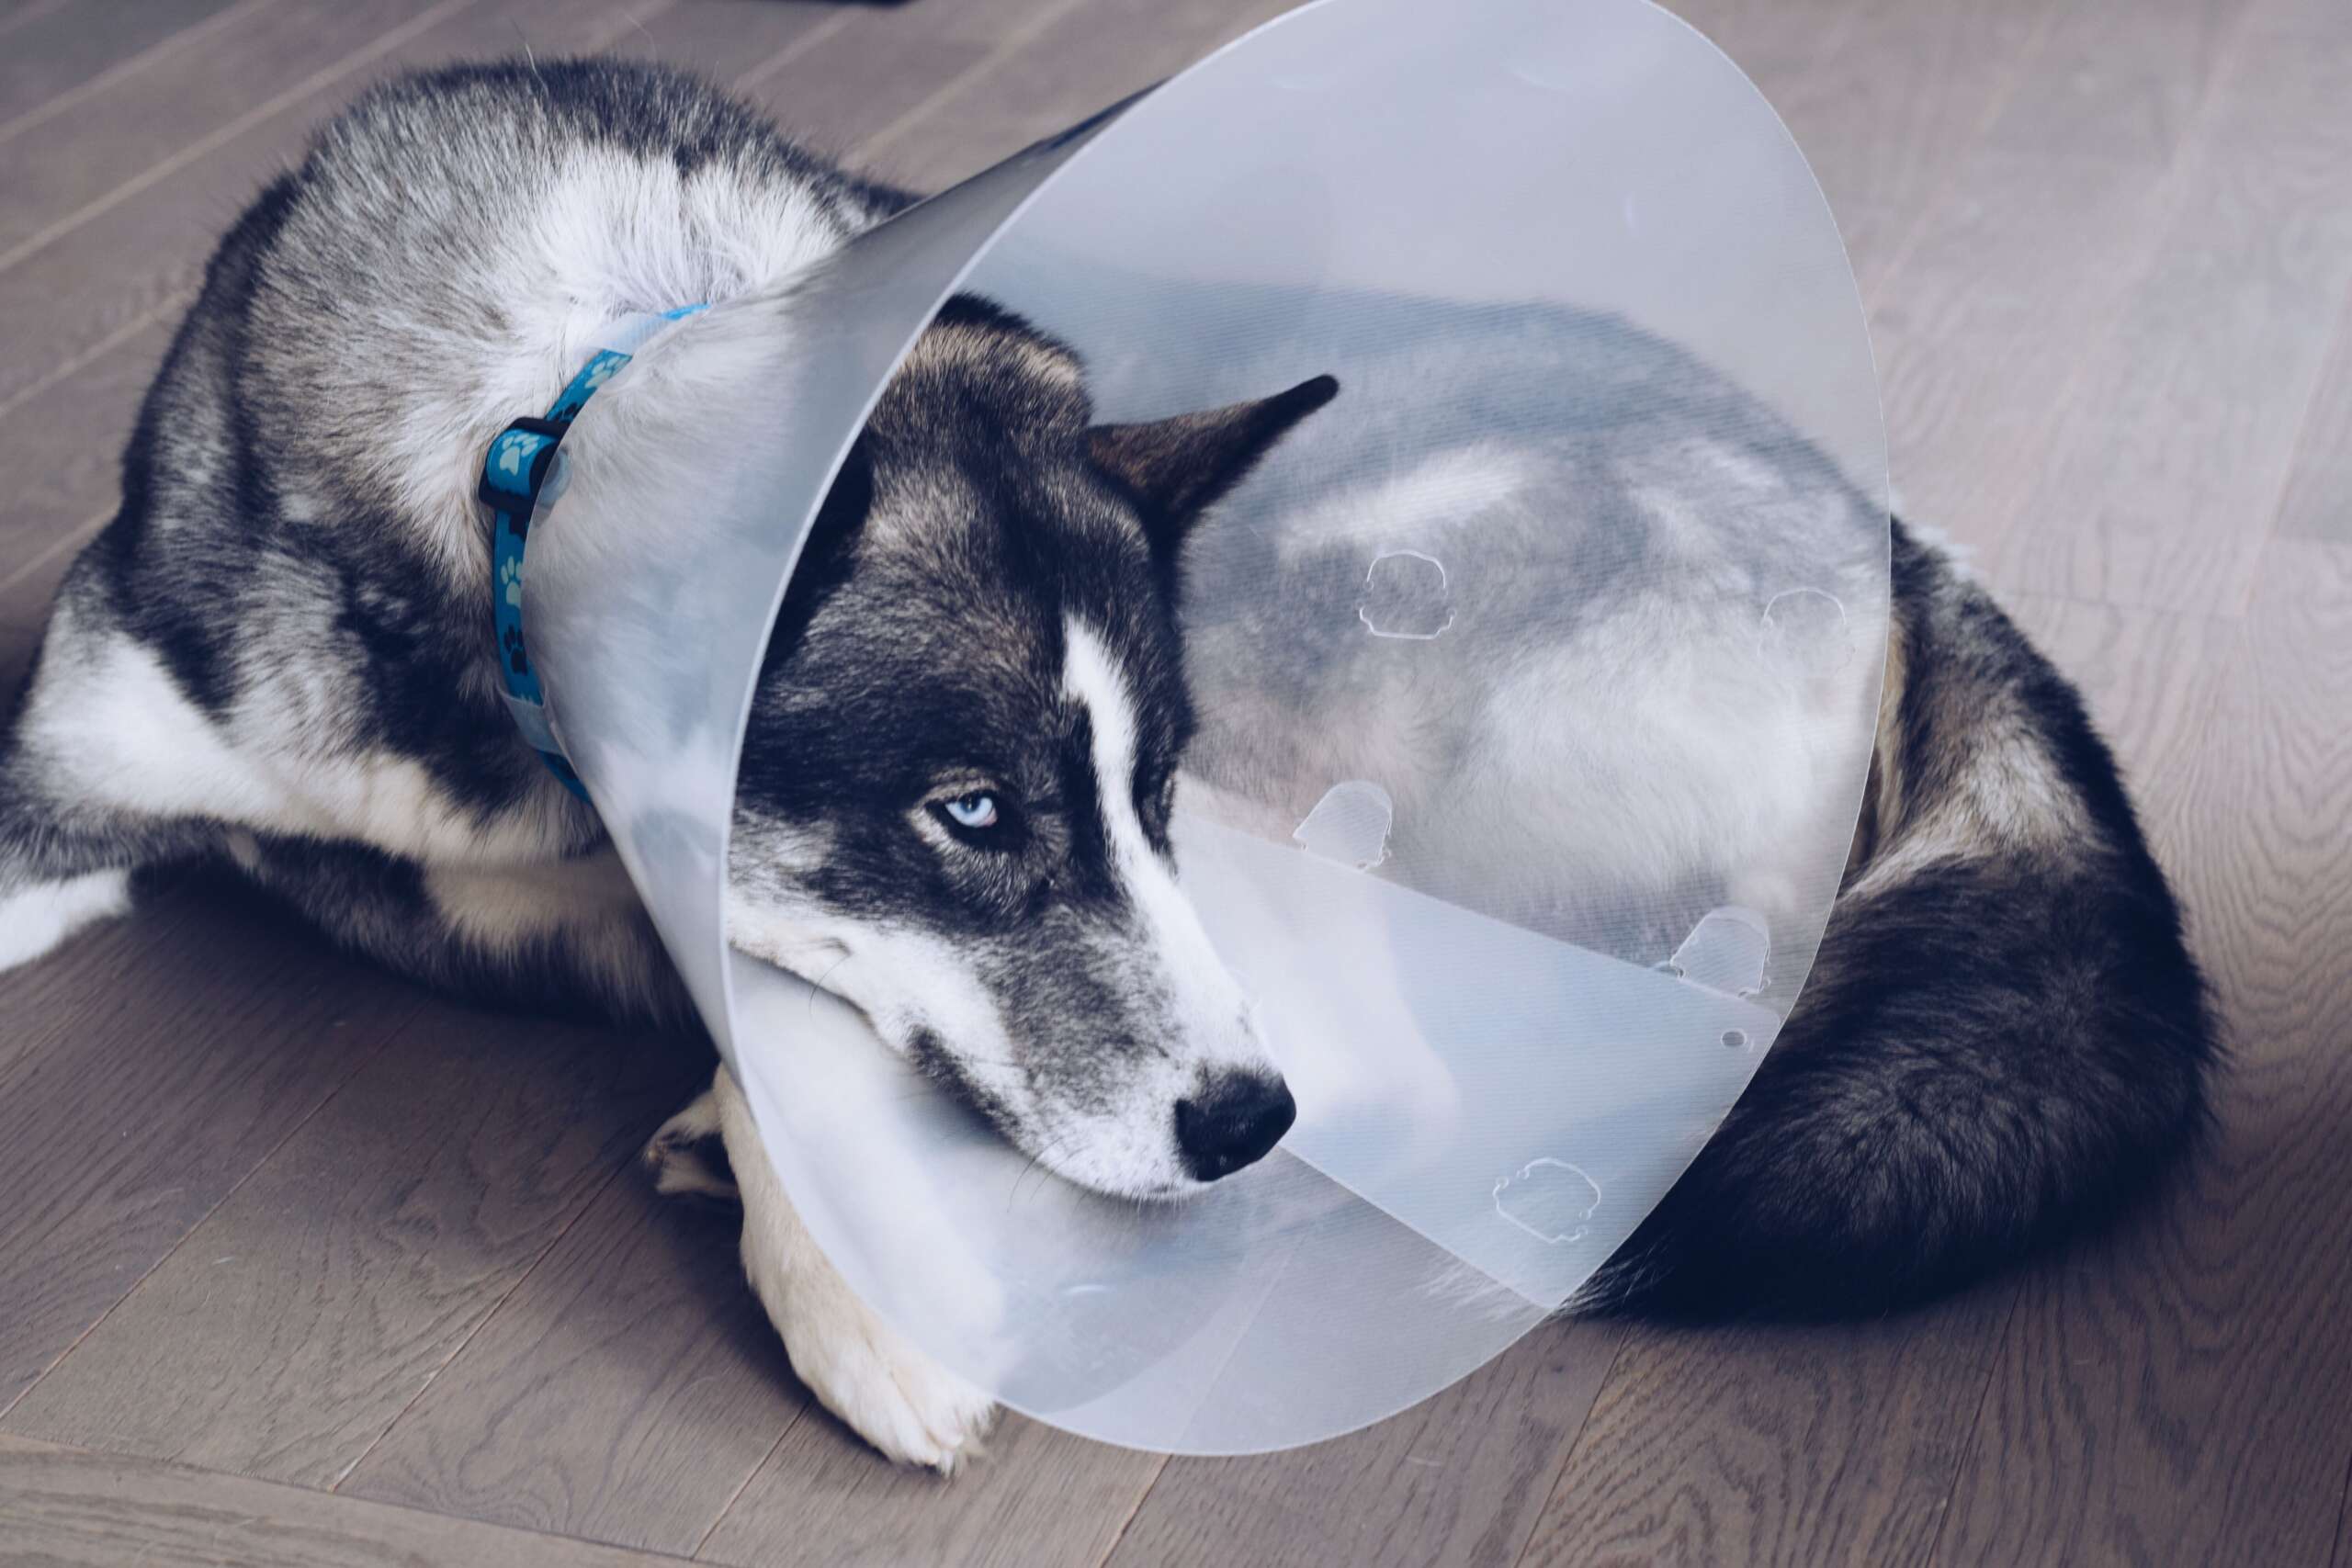 sad-husky-dog-laying-on-a-floor-wearing-a-cone-aft-2022-11-14-06-17-40-utc-min